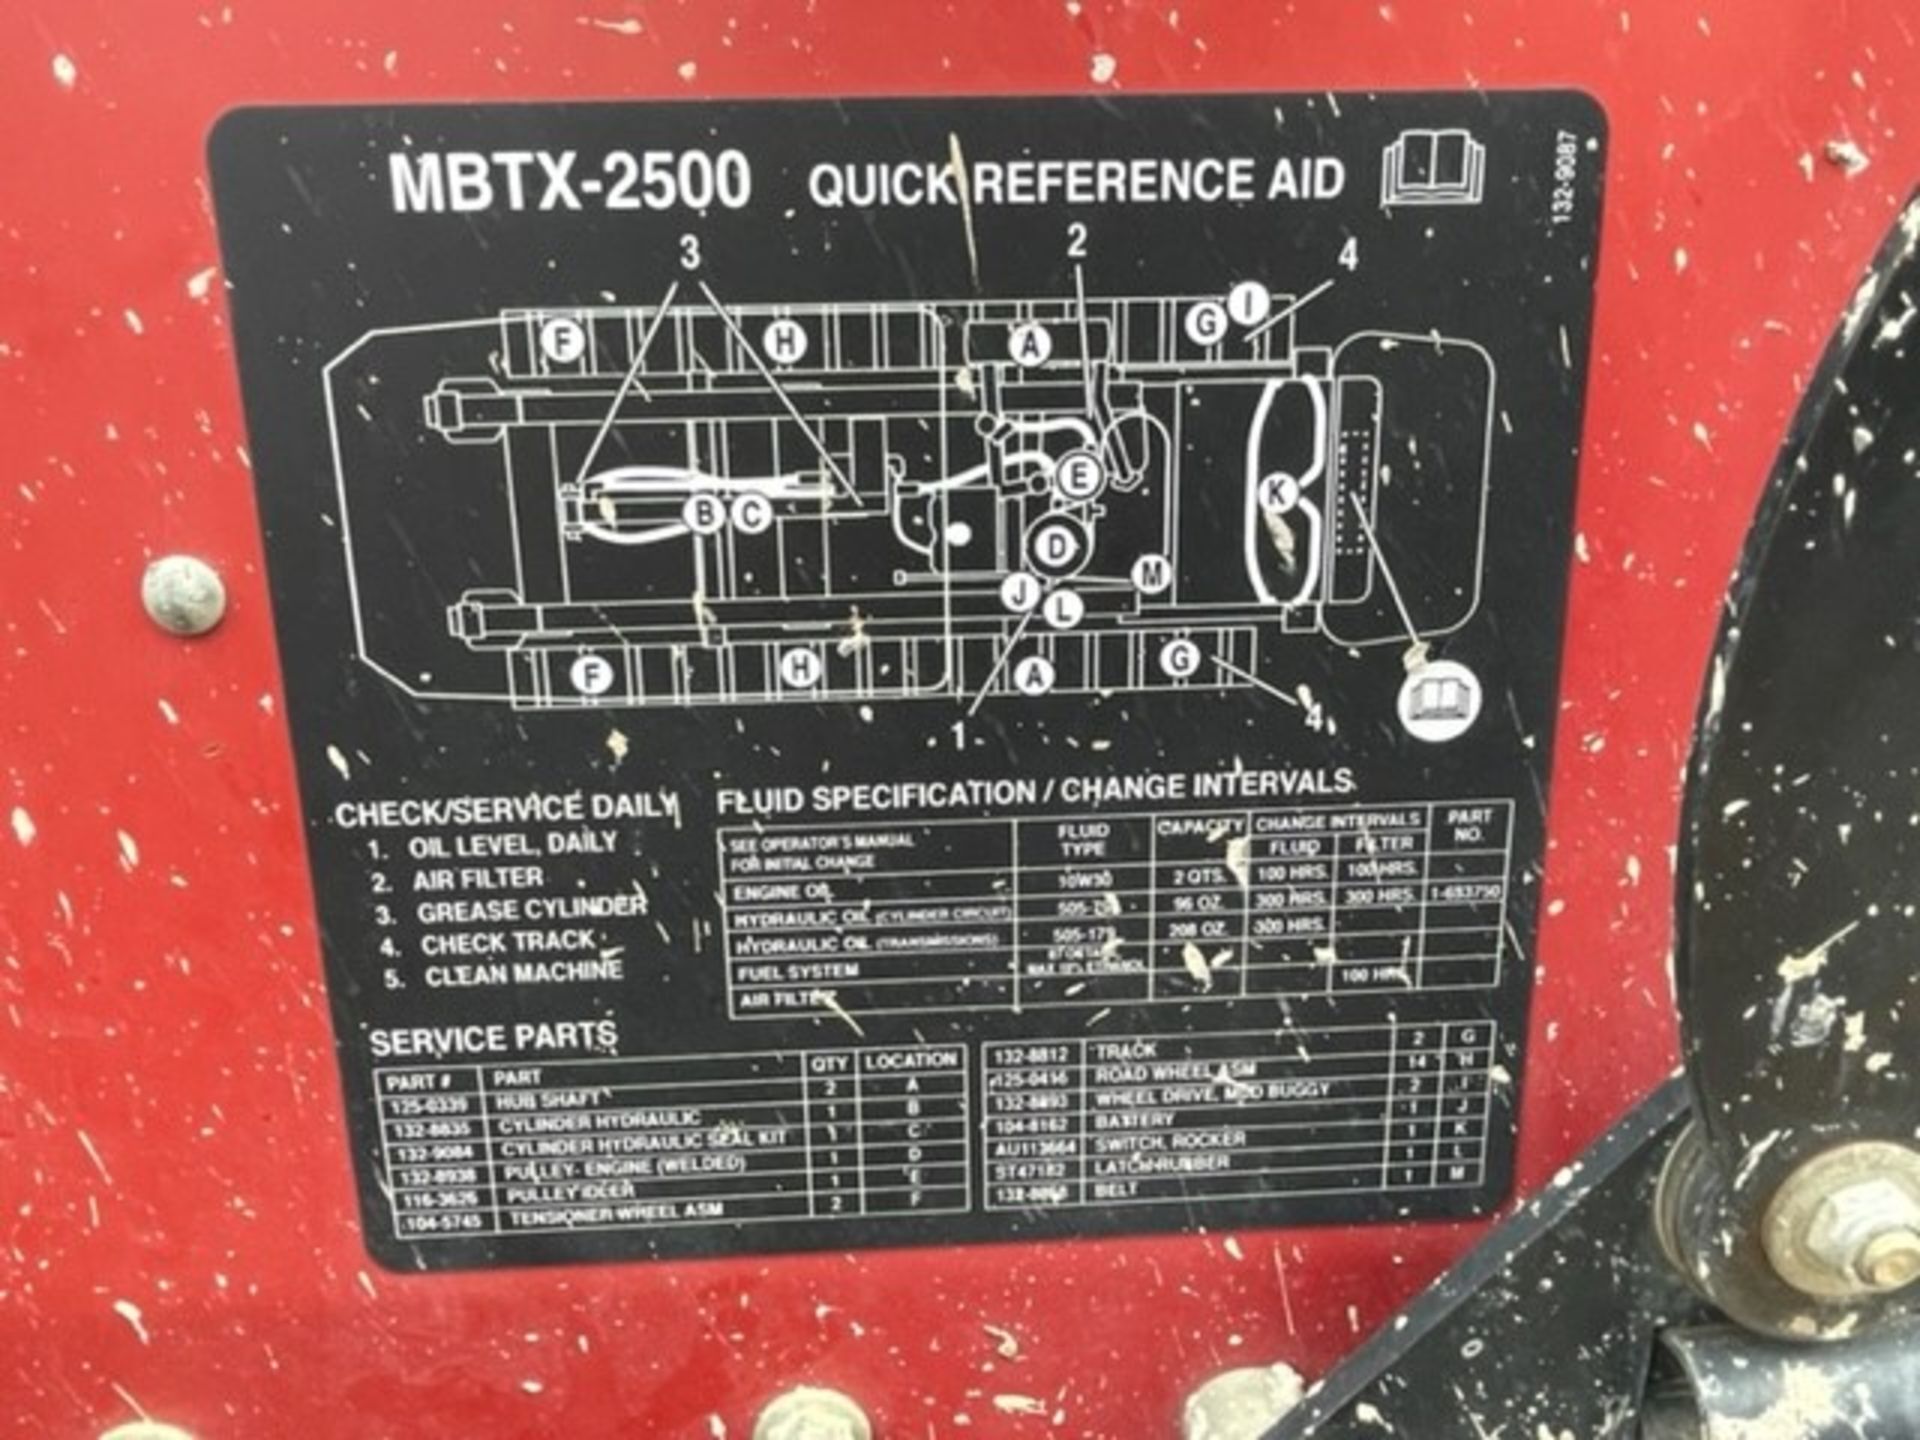 2017 Toro MB TX2500 Concrete Buggy - Image 23 of 26